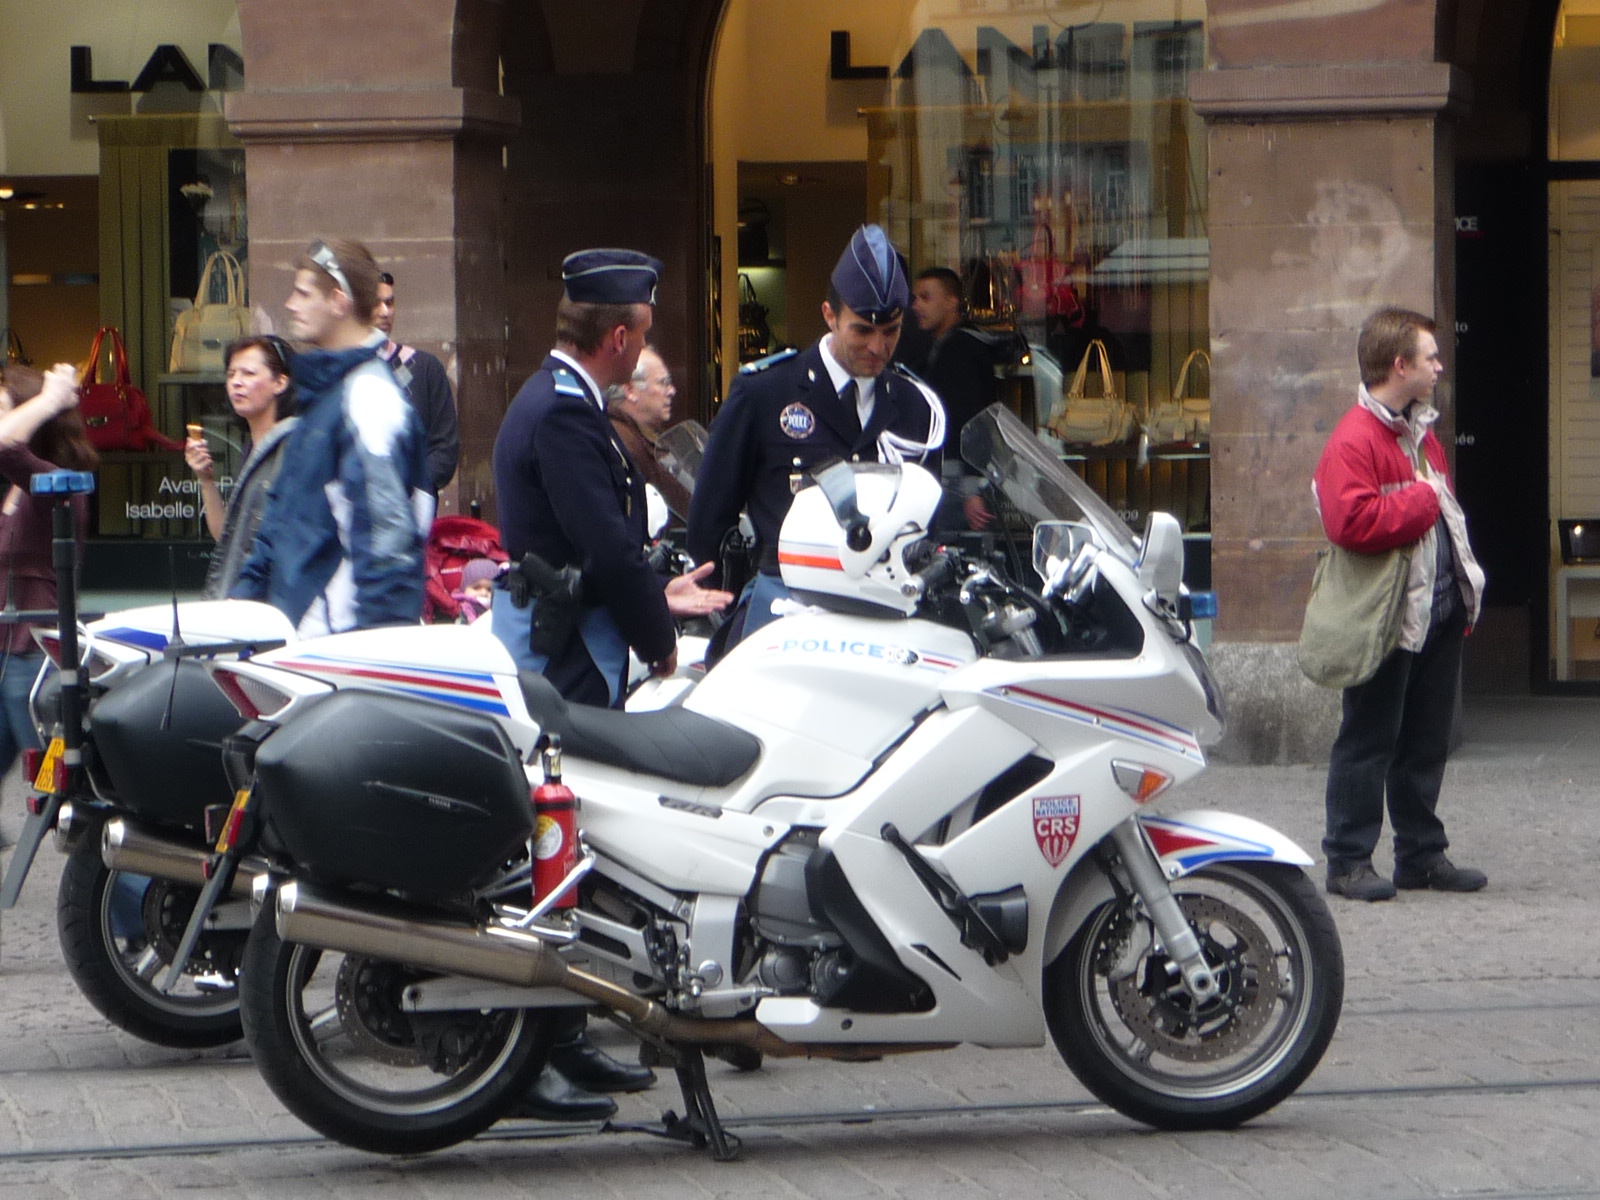 http://4.bp.blogspot.com/_-NpV0kv_j3k/SdZoOsDx7rI/AAAAAAAACf0/ZZPHrgewftM/s1600/police+otan+strasbourg+moto.JPG